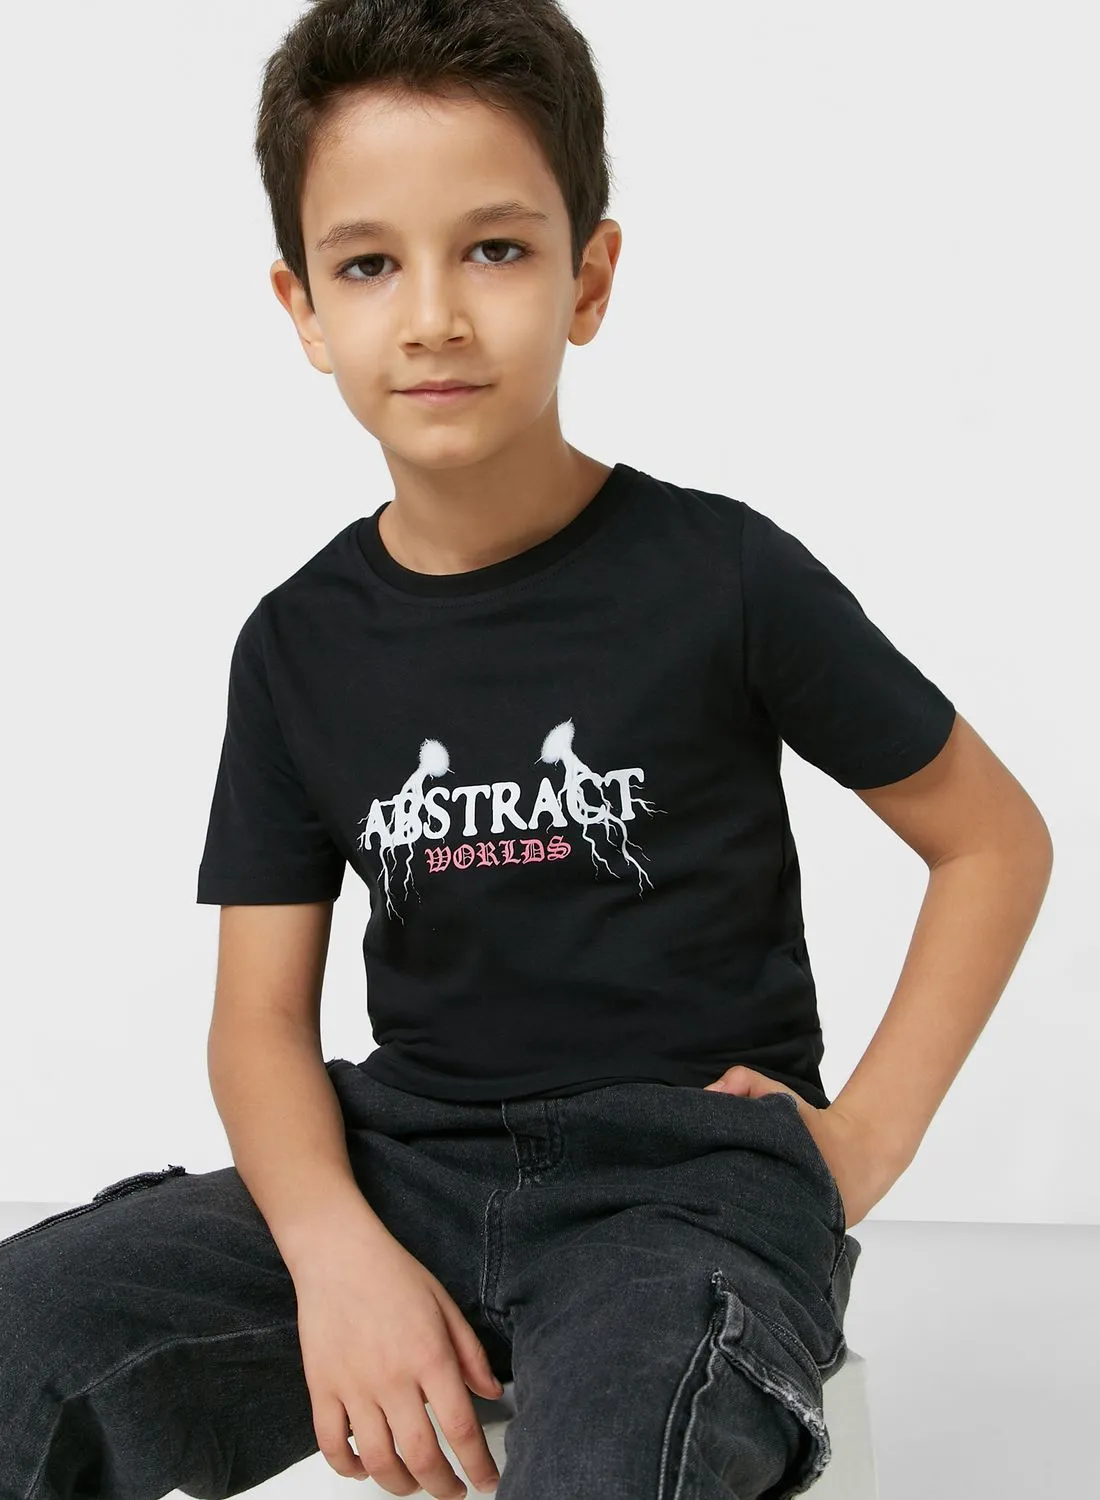 Pinata Front & Back Printed T-Shirt For Boys